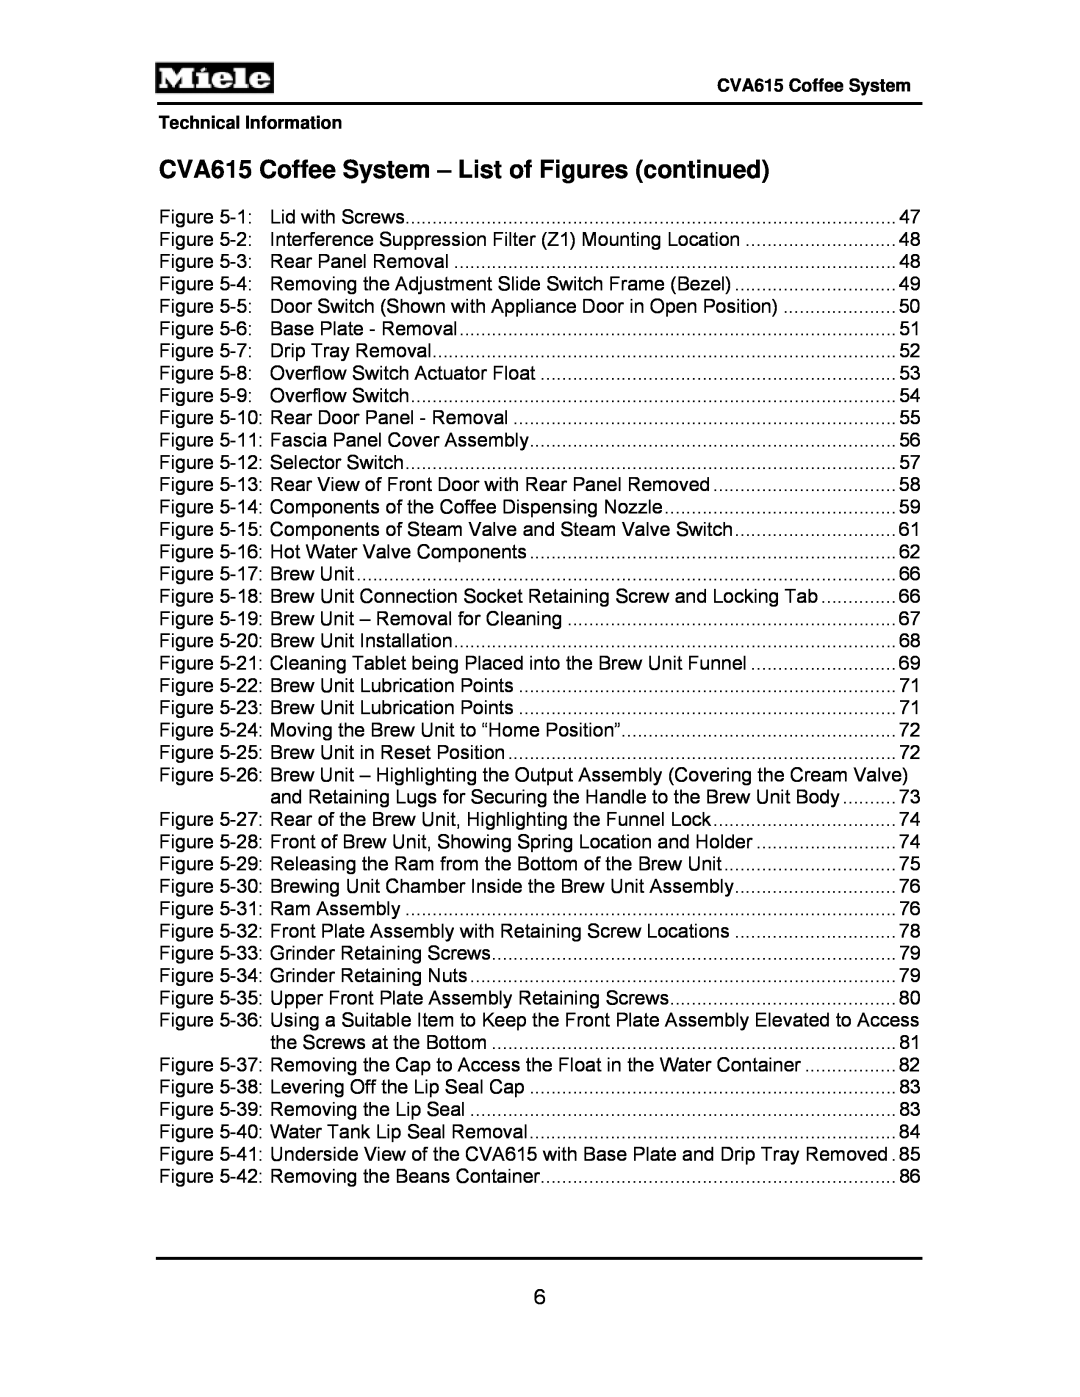 Miele manual CVA615 Coffee System – List of Figures continued 